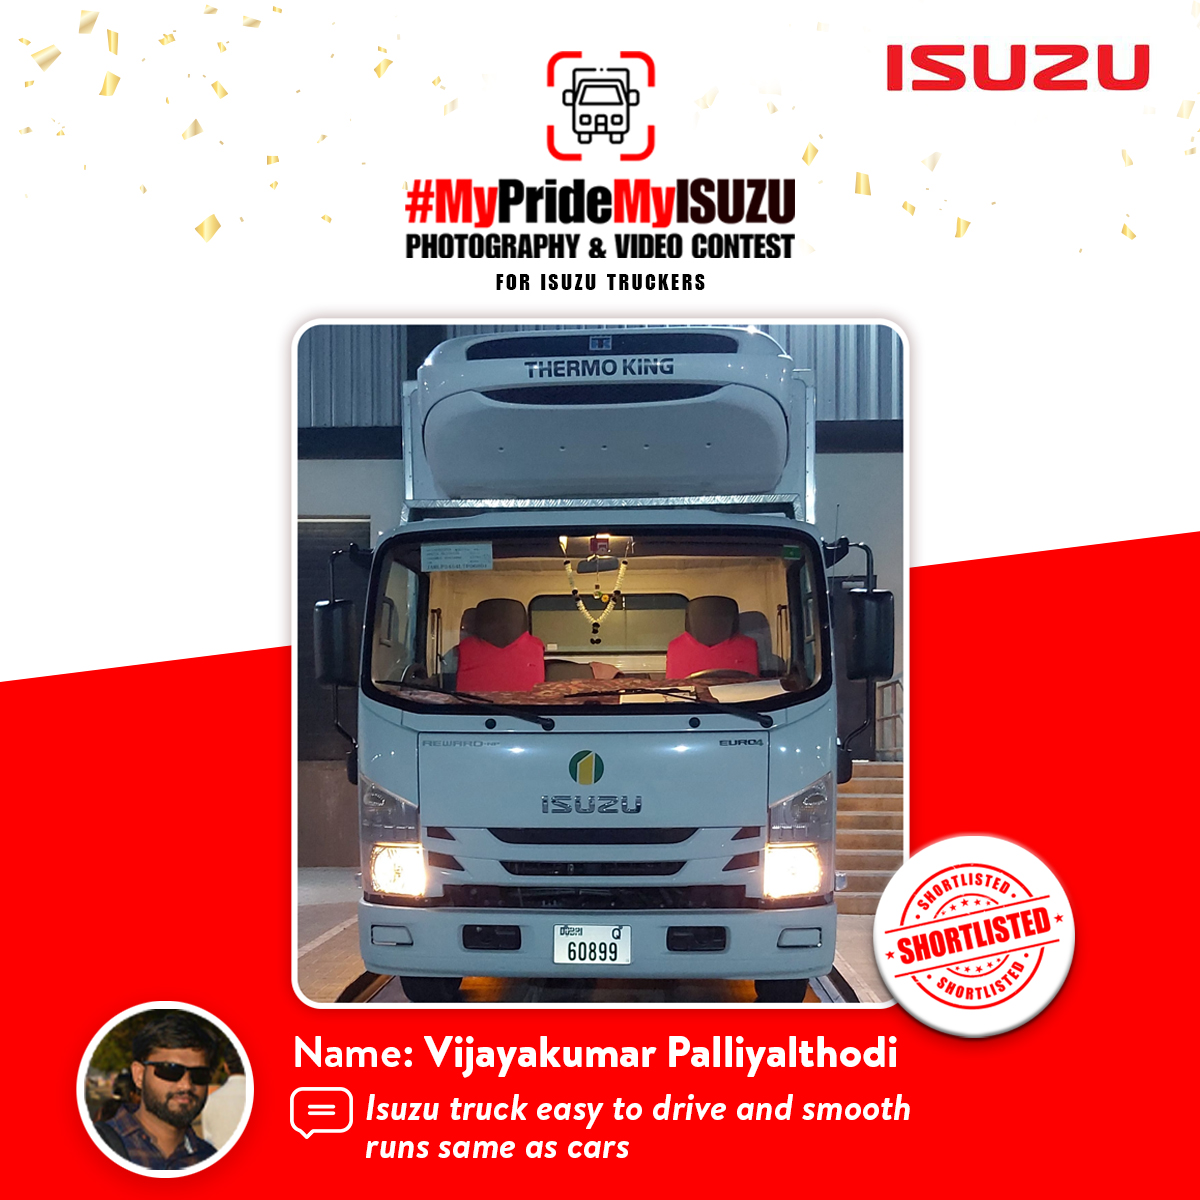 Entry 8 #MyPrideMyIsuzu Vijaykumar